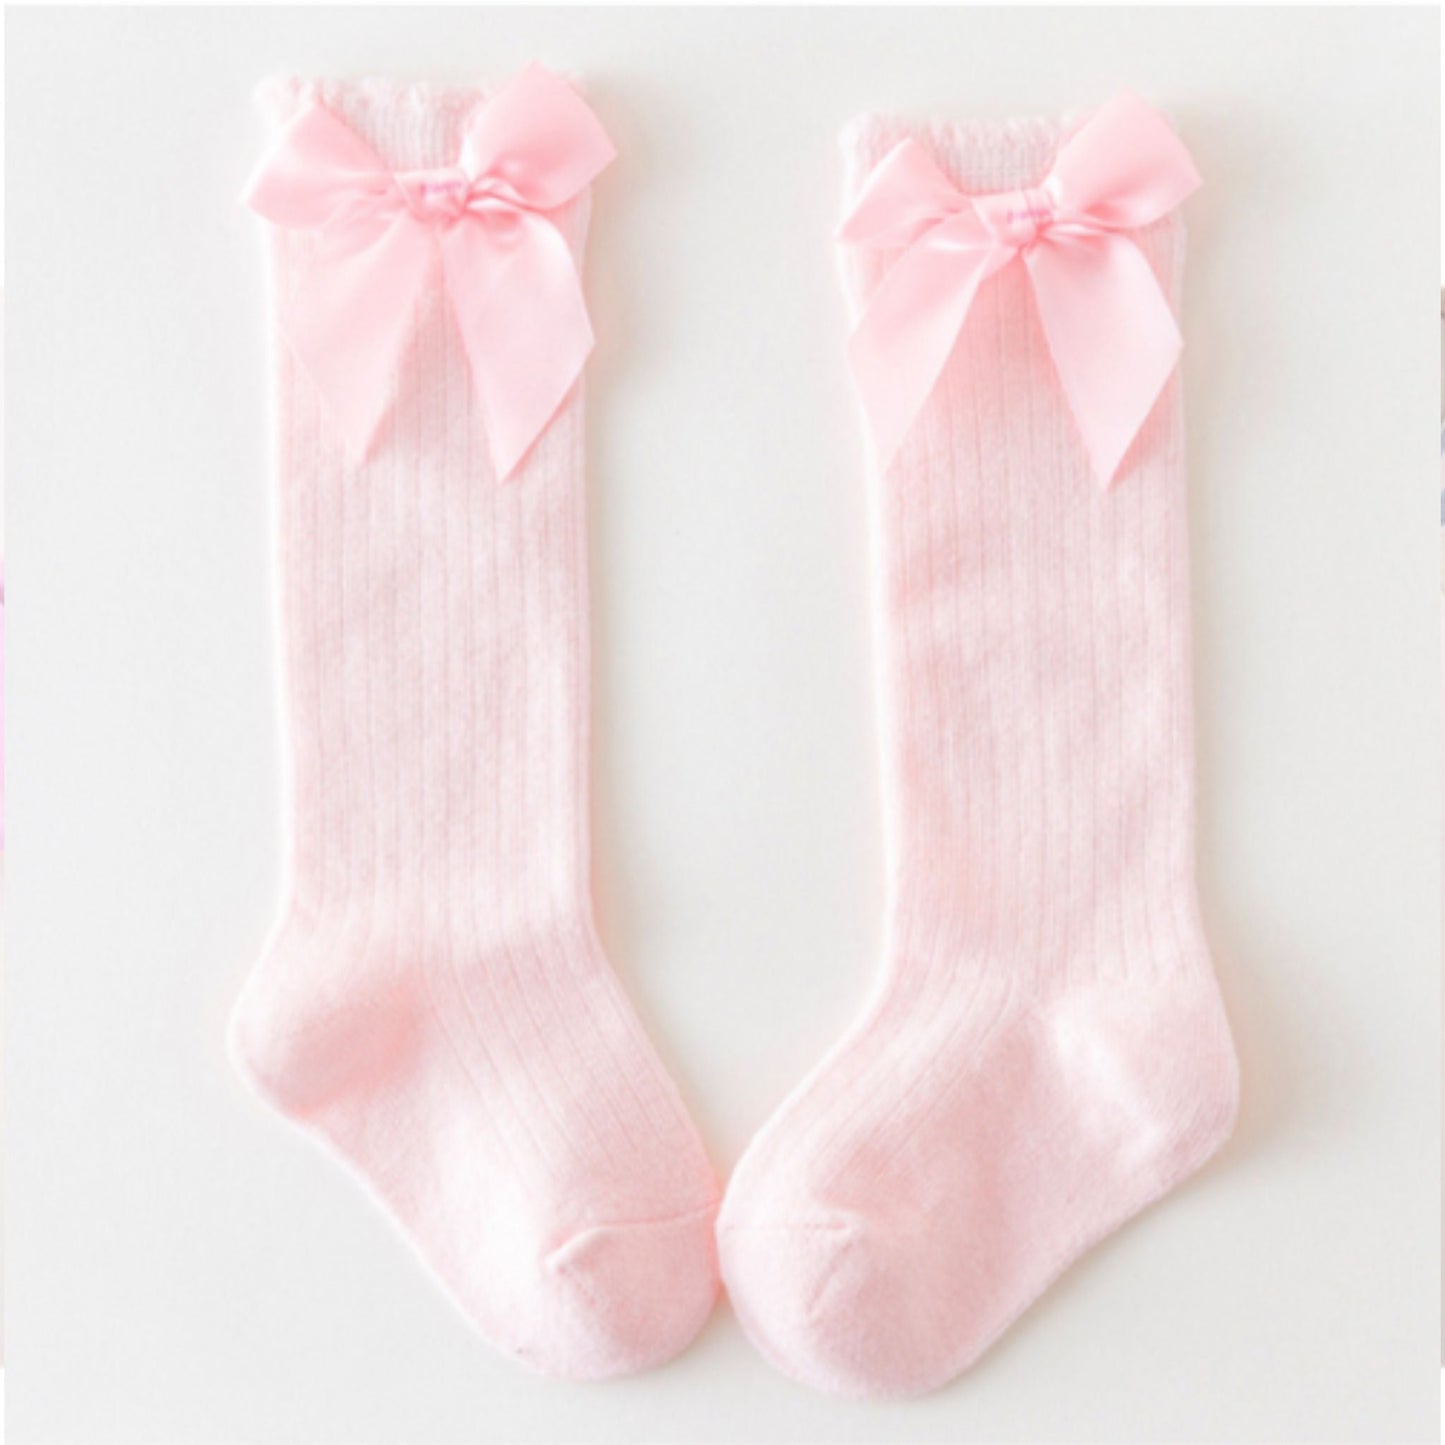 Pretty Pink Baby Girl Baby Birthday Gift Set 12-18 Months